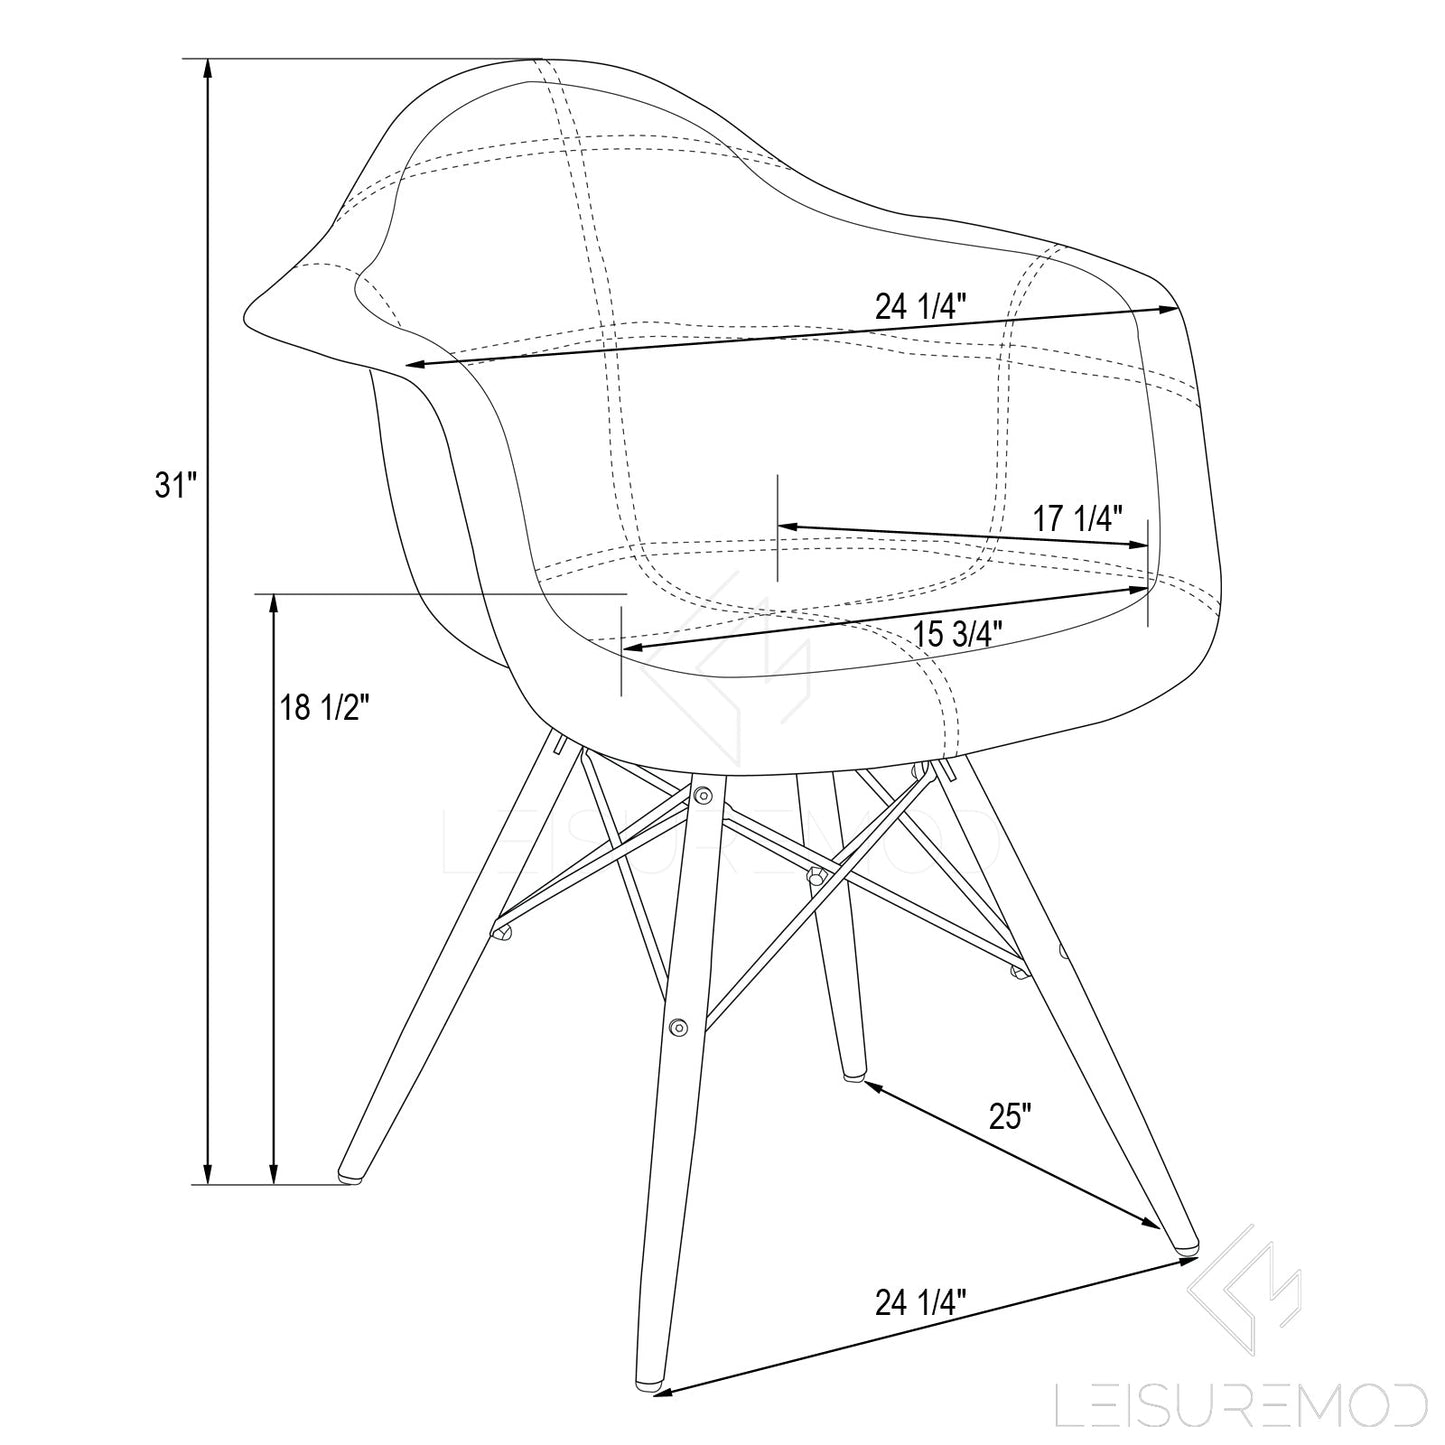 Lewie Eiffel Accent Chair - Metal Base Set of 2